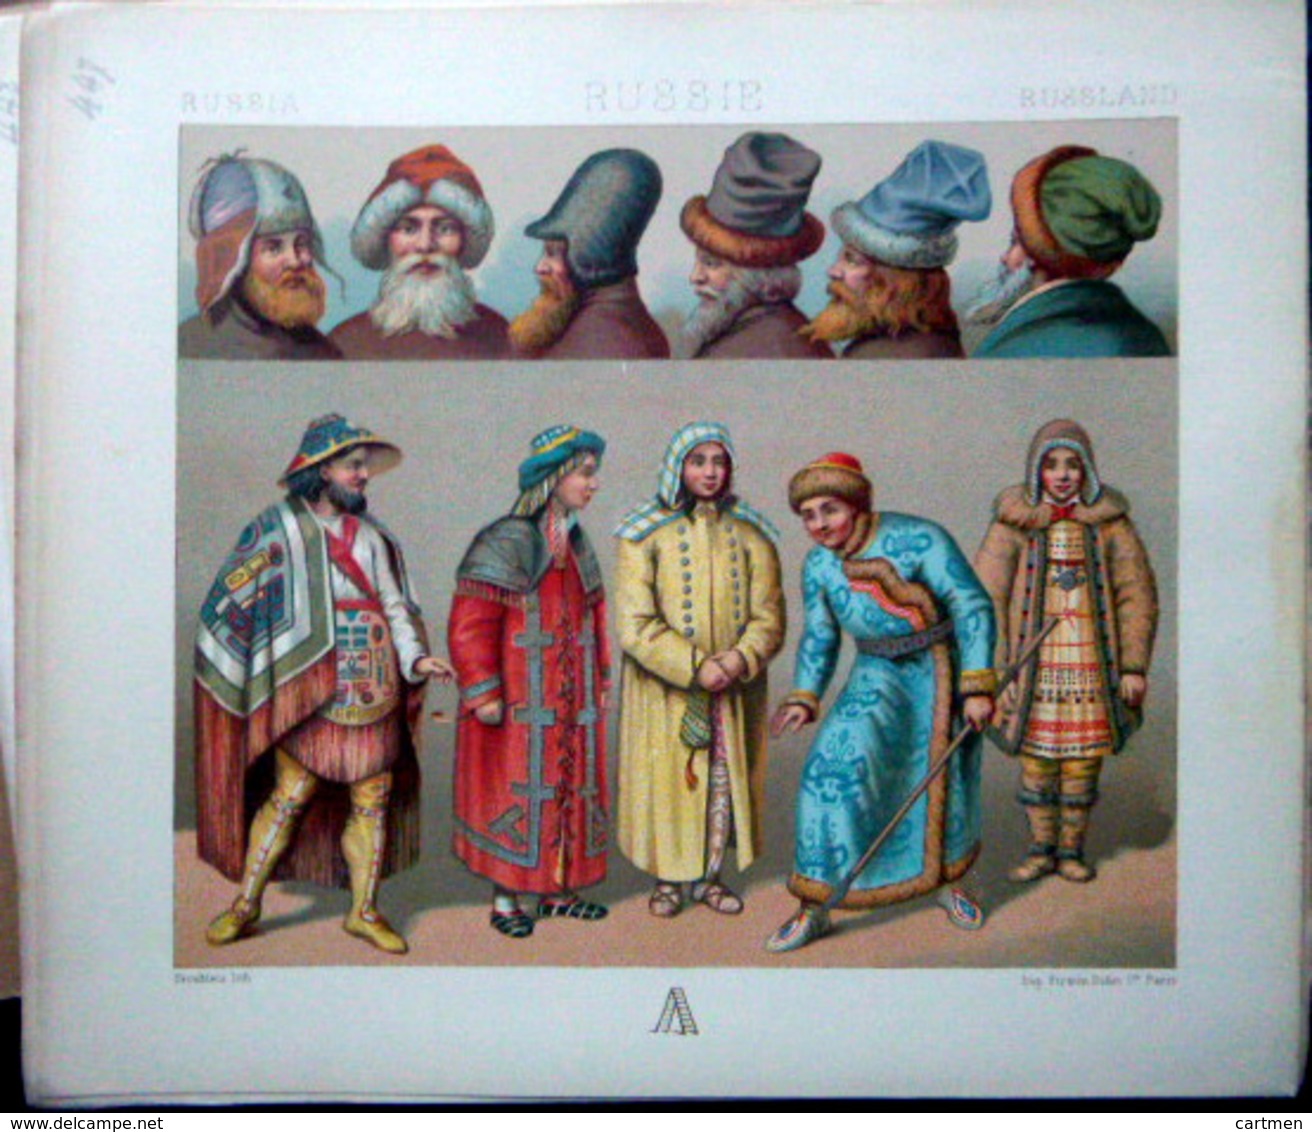 RUSSIE RUSSIA COSTUMES DECORATION 9 PLANCHES CHROMOLITHOS DOREES COLOREES COSTUMES MILITAIRES FEMMES 1888